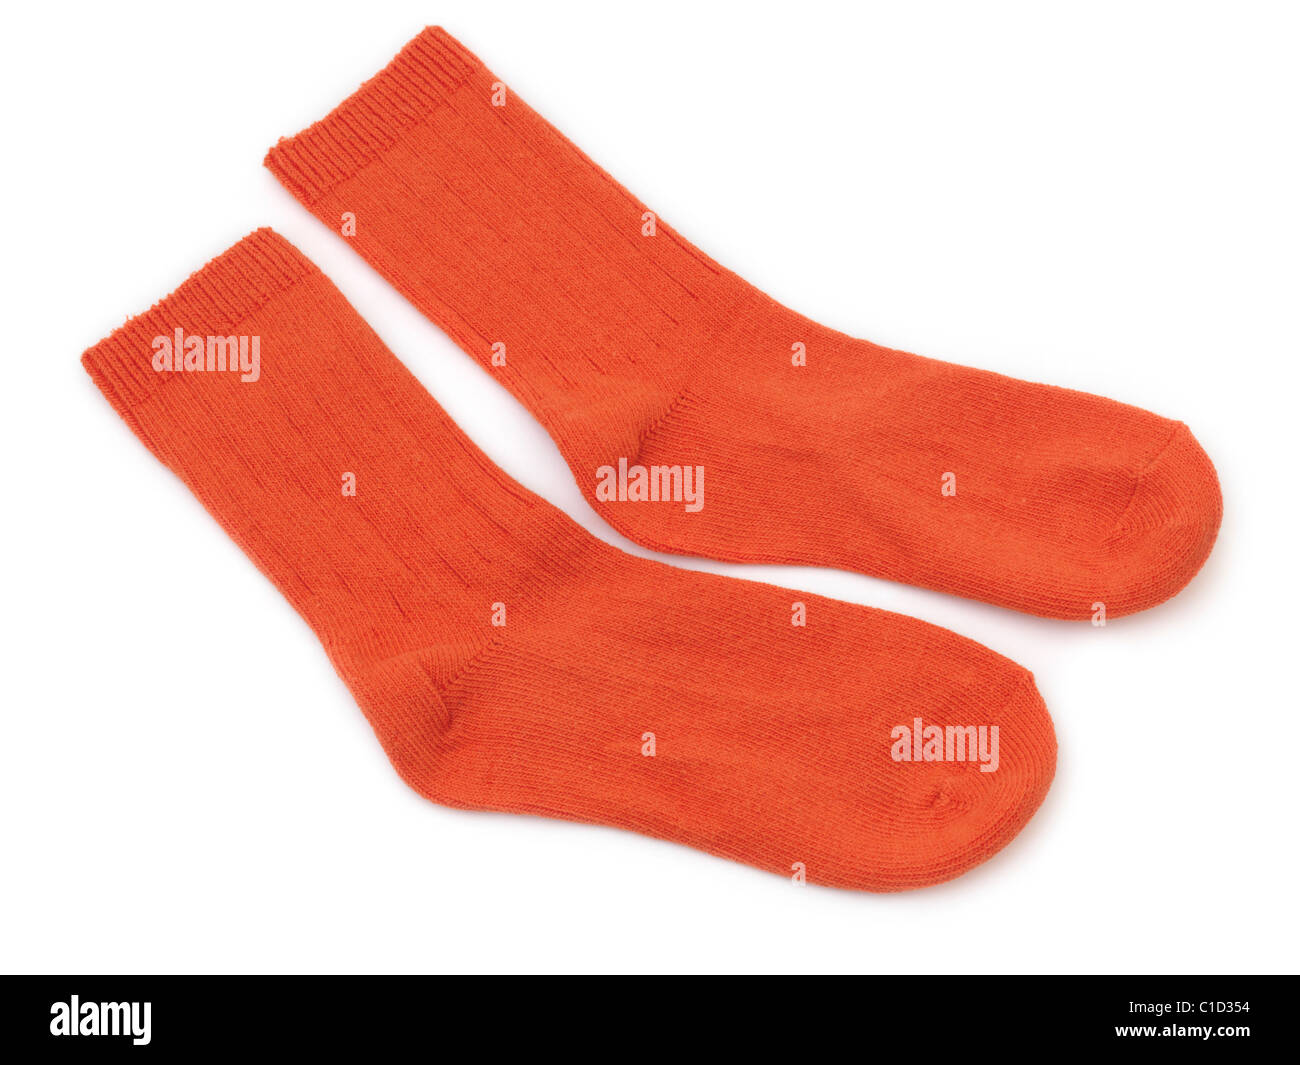 Un par de calcetines para niños naranja Foto de stock